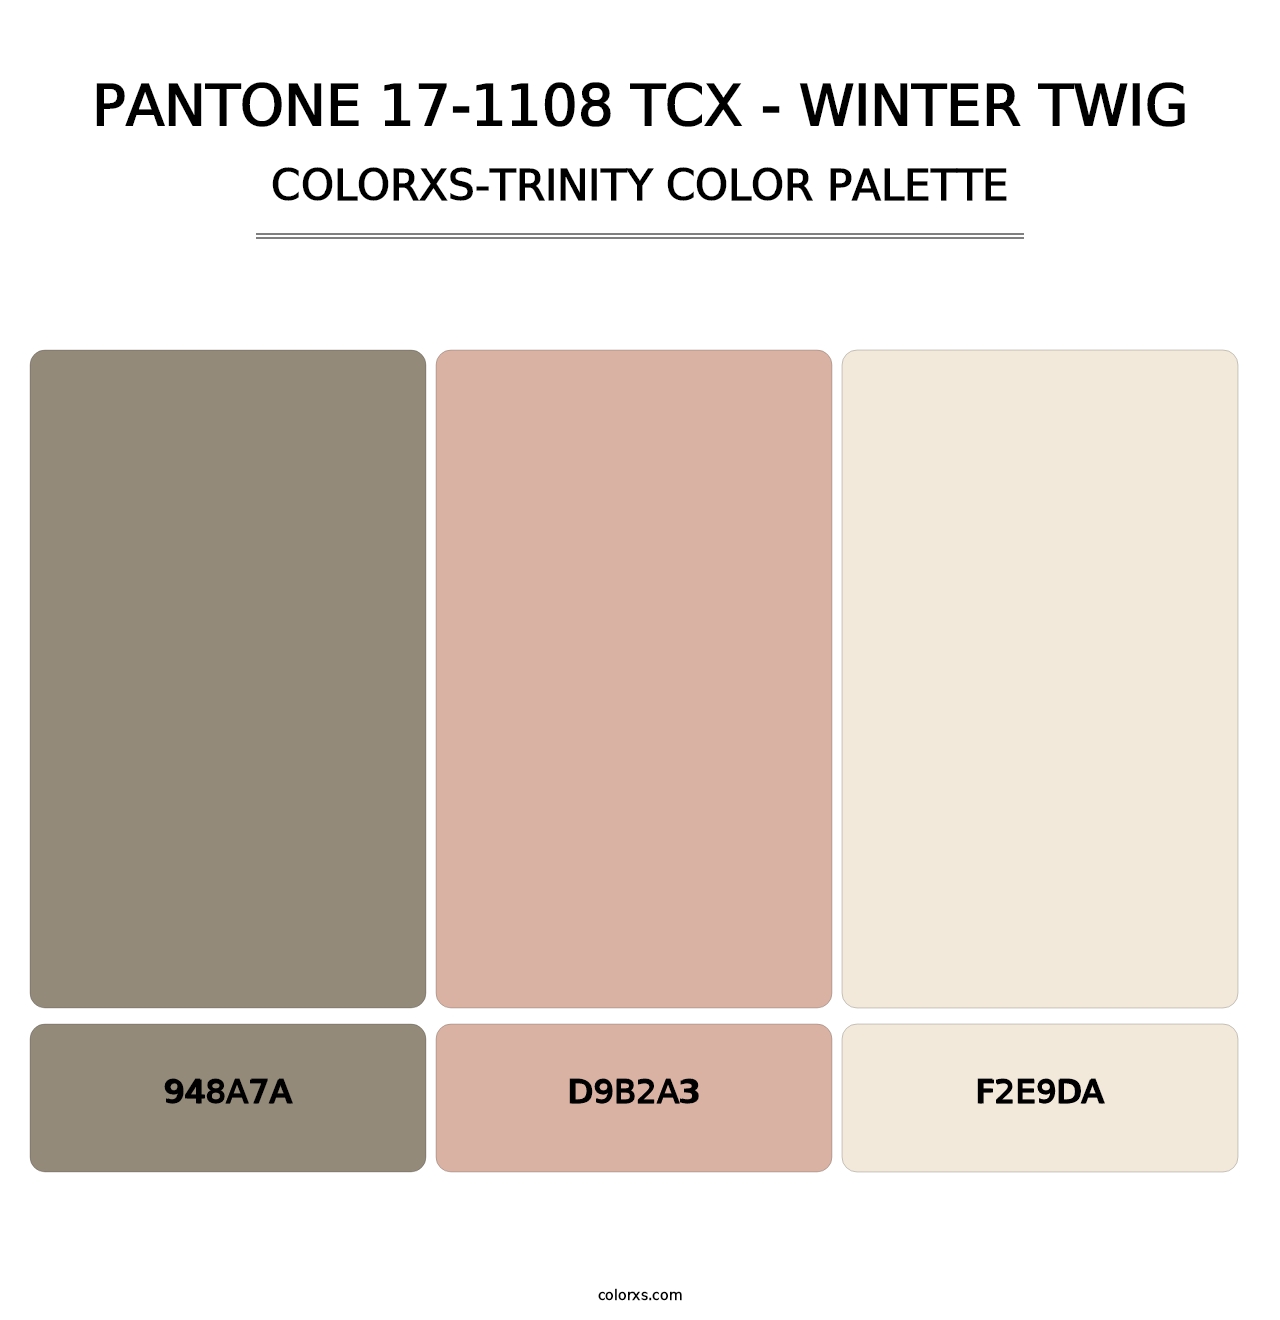 PANTONE 17-1108 TCX - Winter Twig - Colorxs Trinity Palette